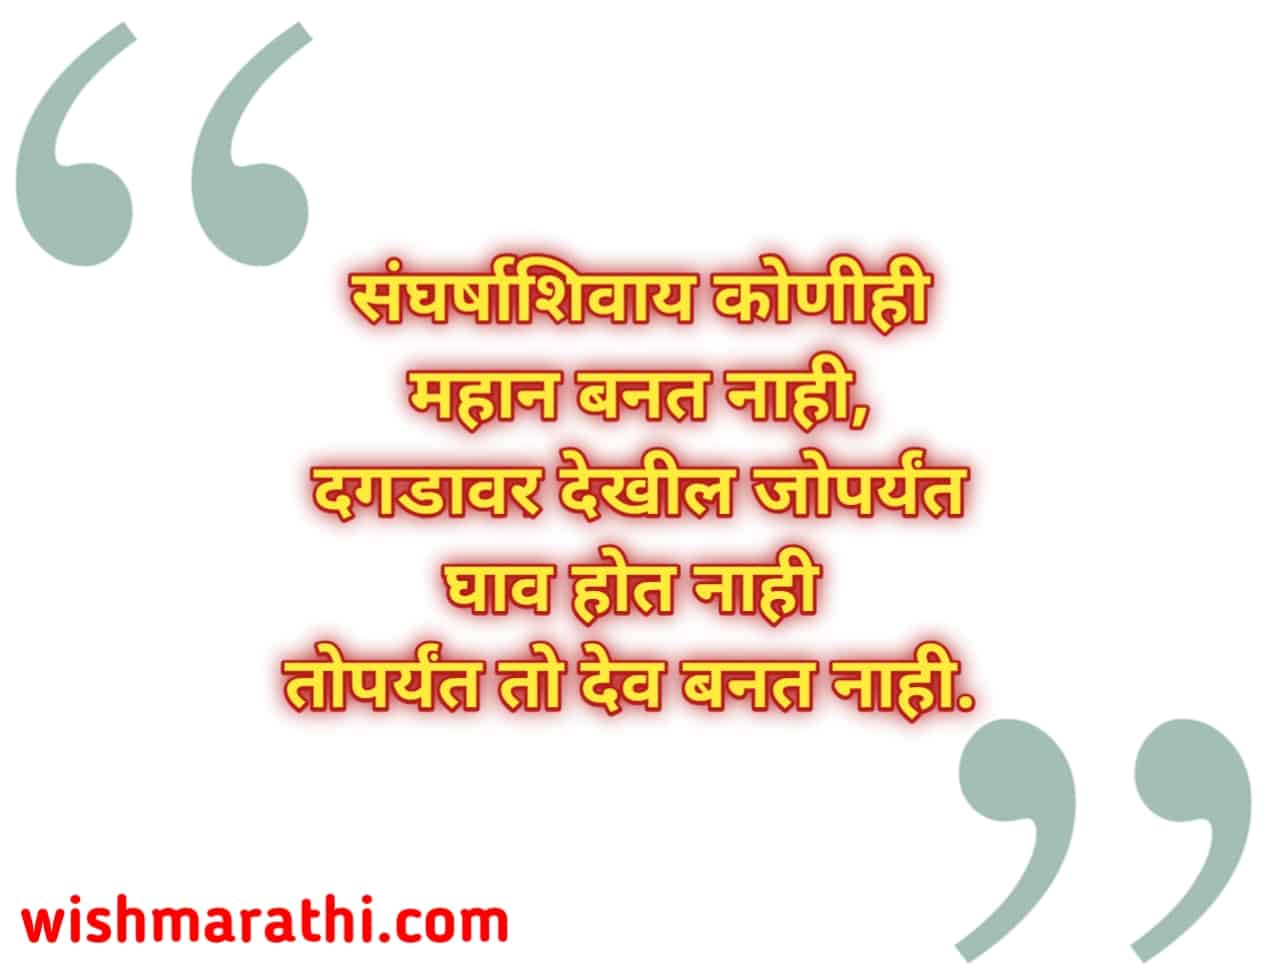 Life Quotes in Marathi